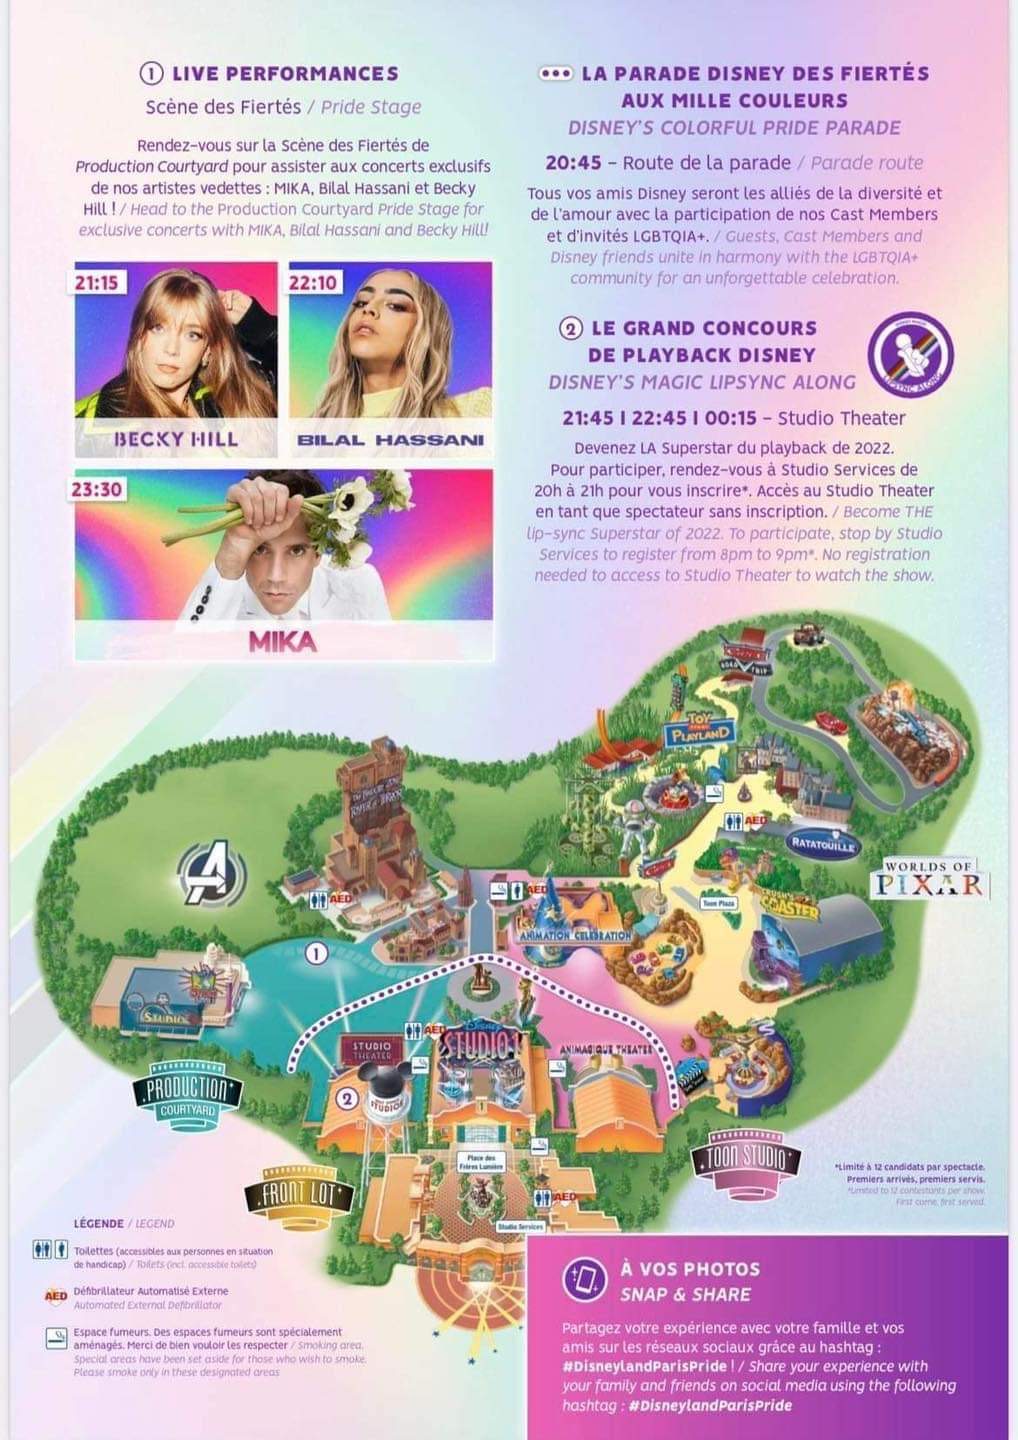 Disneyland Paris Pride (11 juin 2022) - Page 2 D536de10